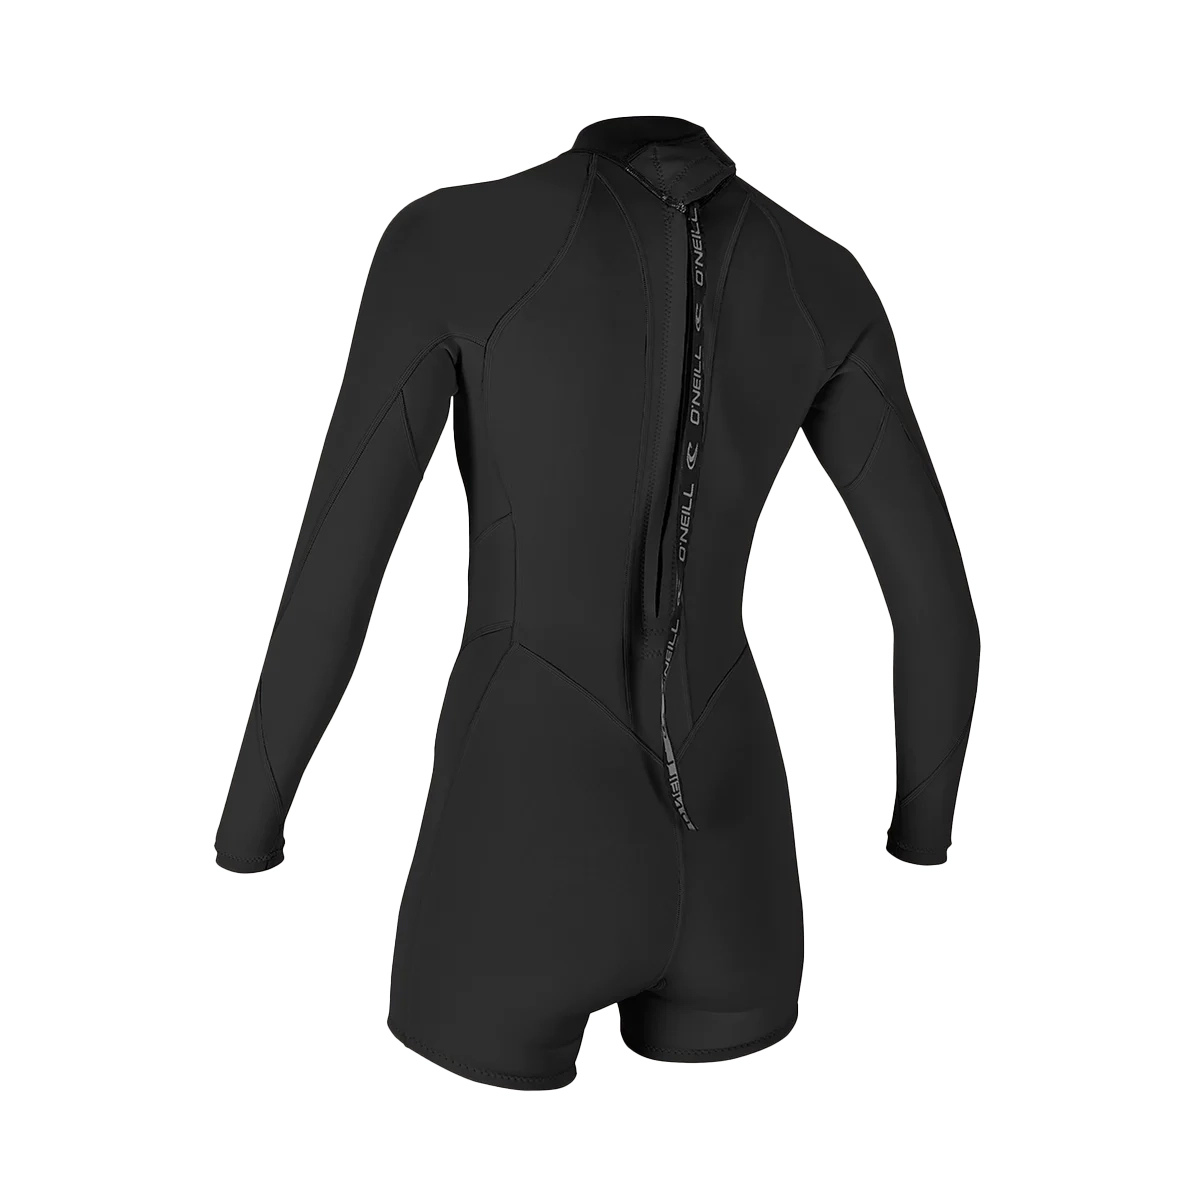 O'Neill Women's Bahia 2/1mm Back Zip Long Sleeve Spring Wetsuit - image 3 of 3